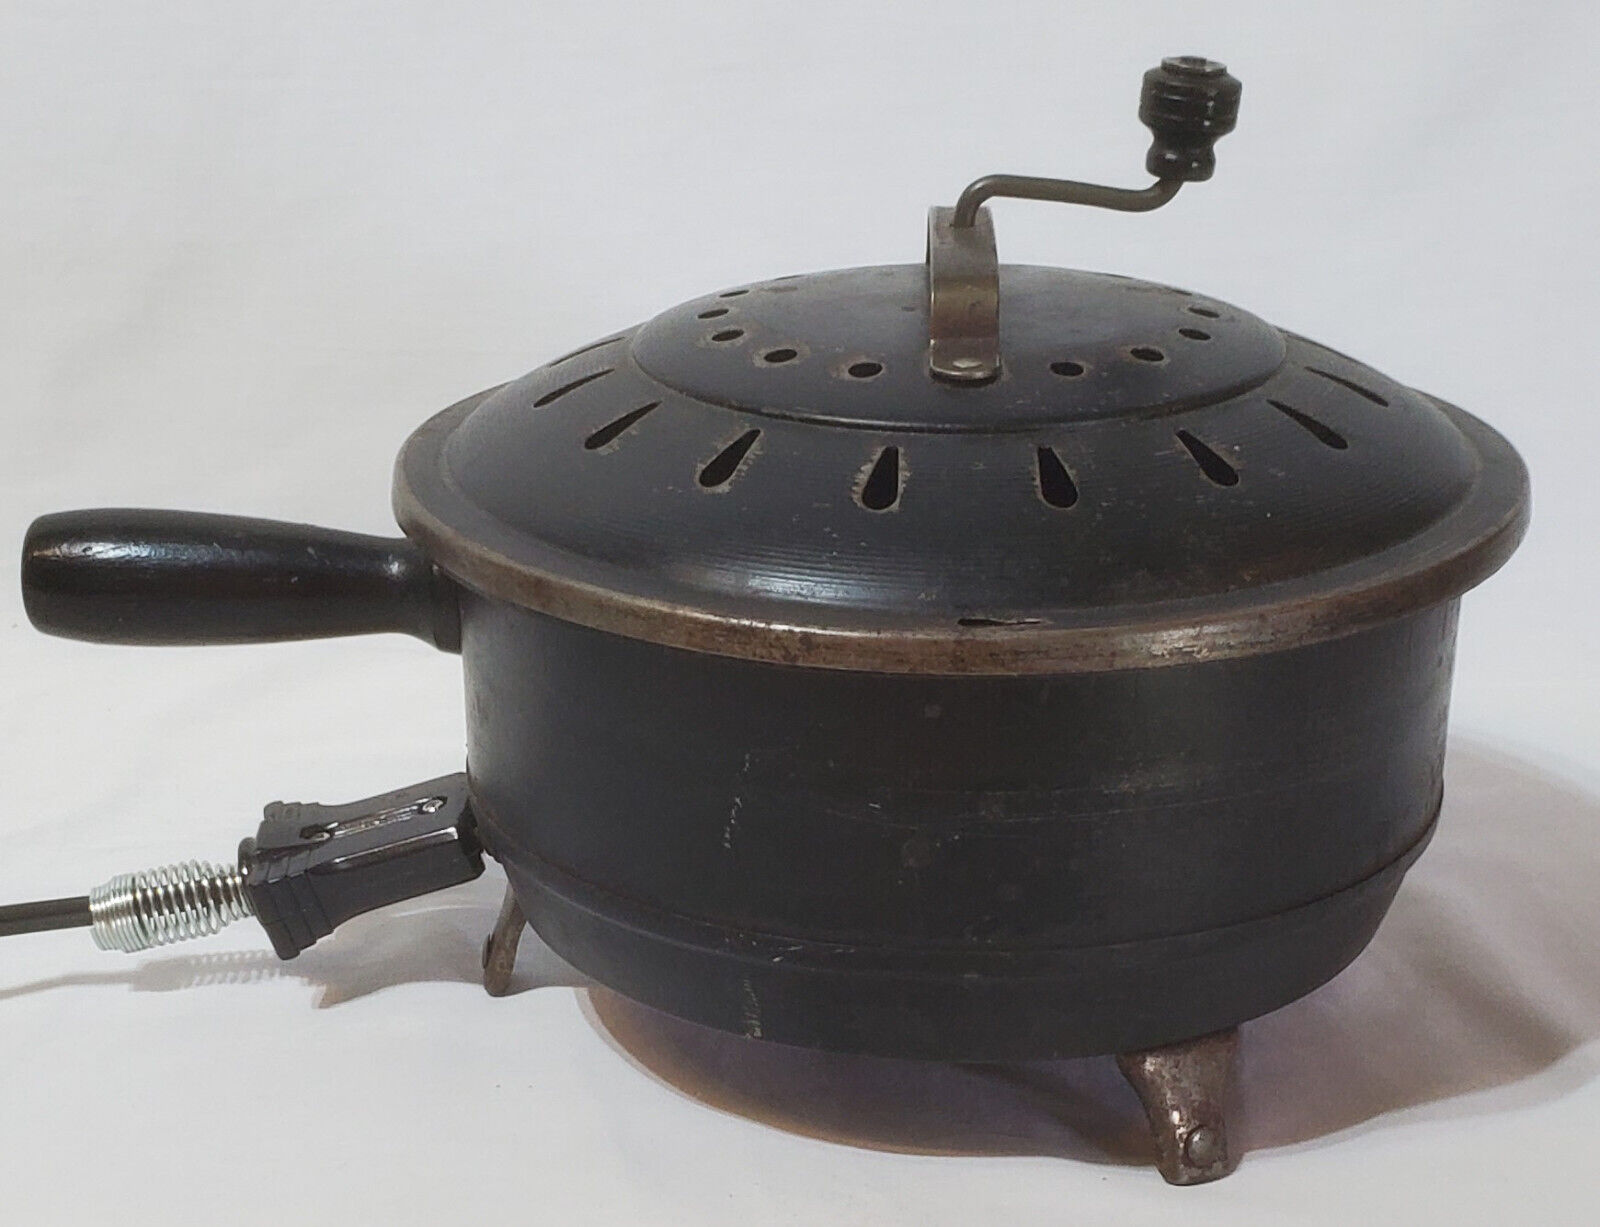 Antique 1930's Kwik Pop Electric Popcorn Popper - Heats Up